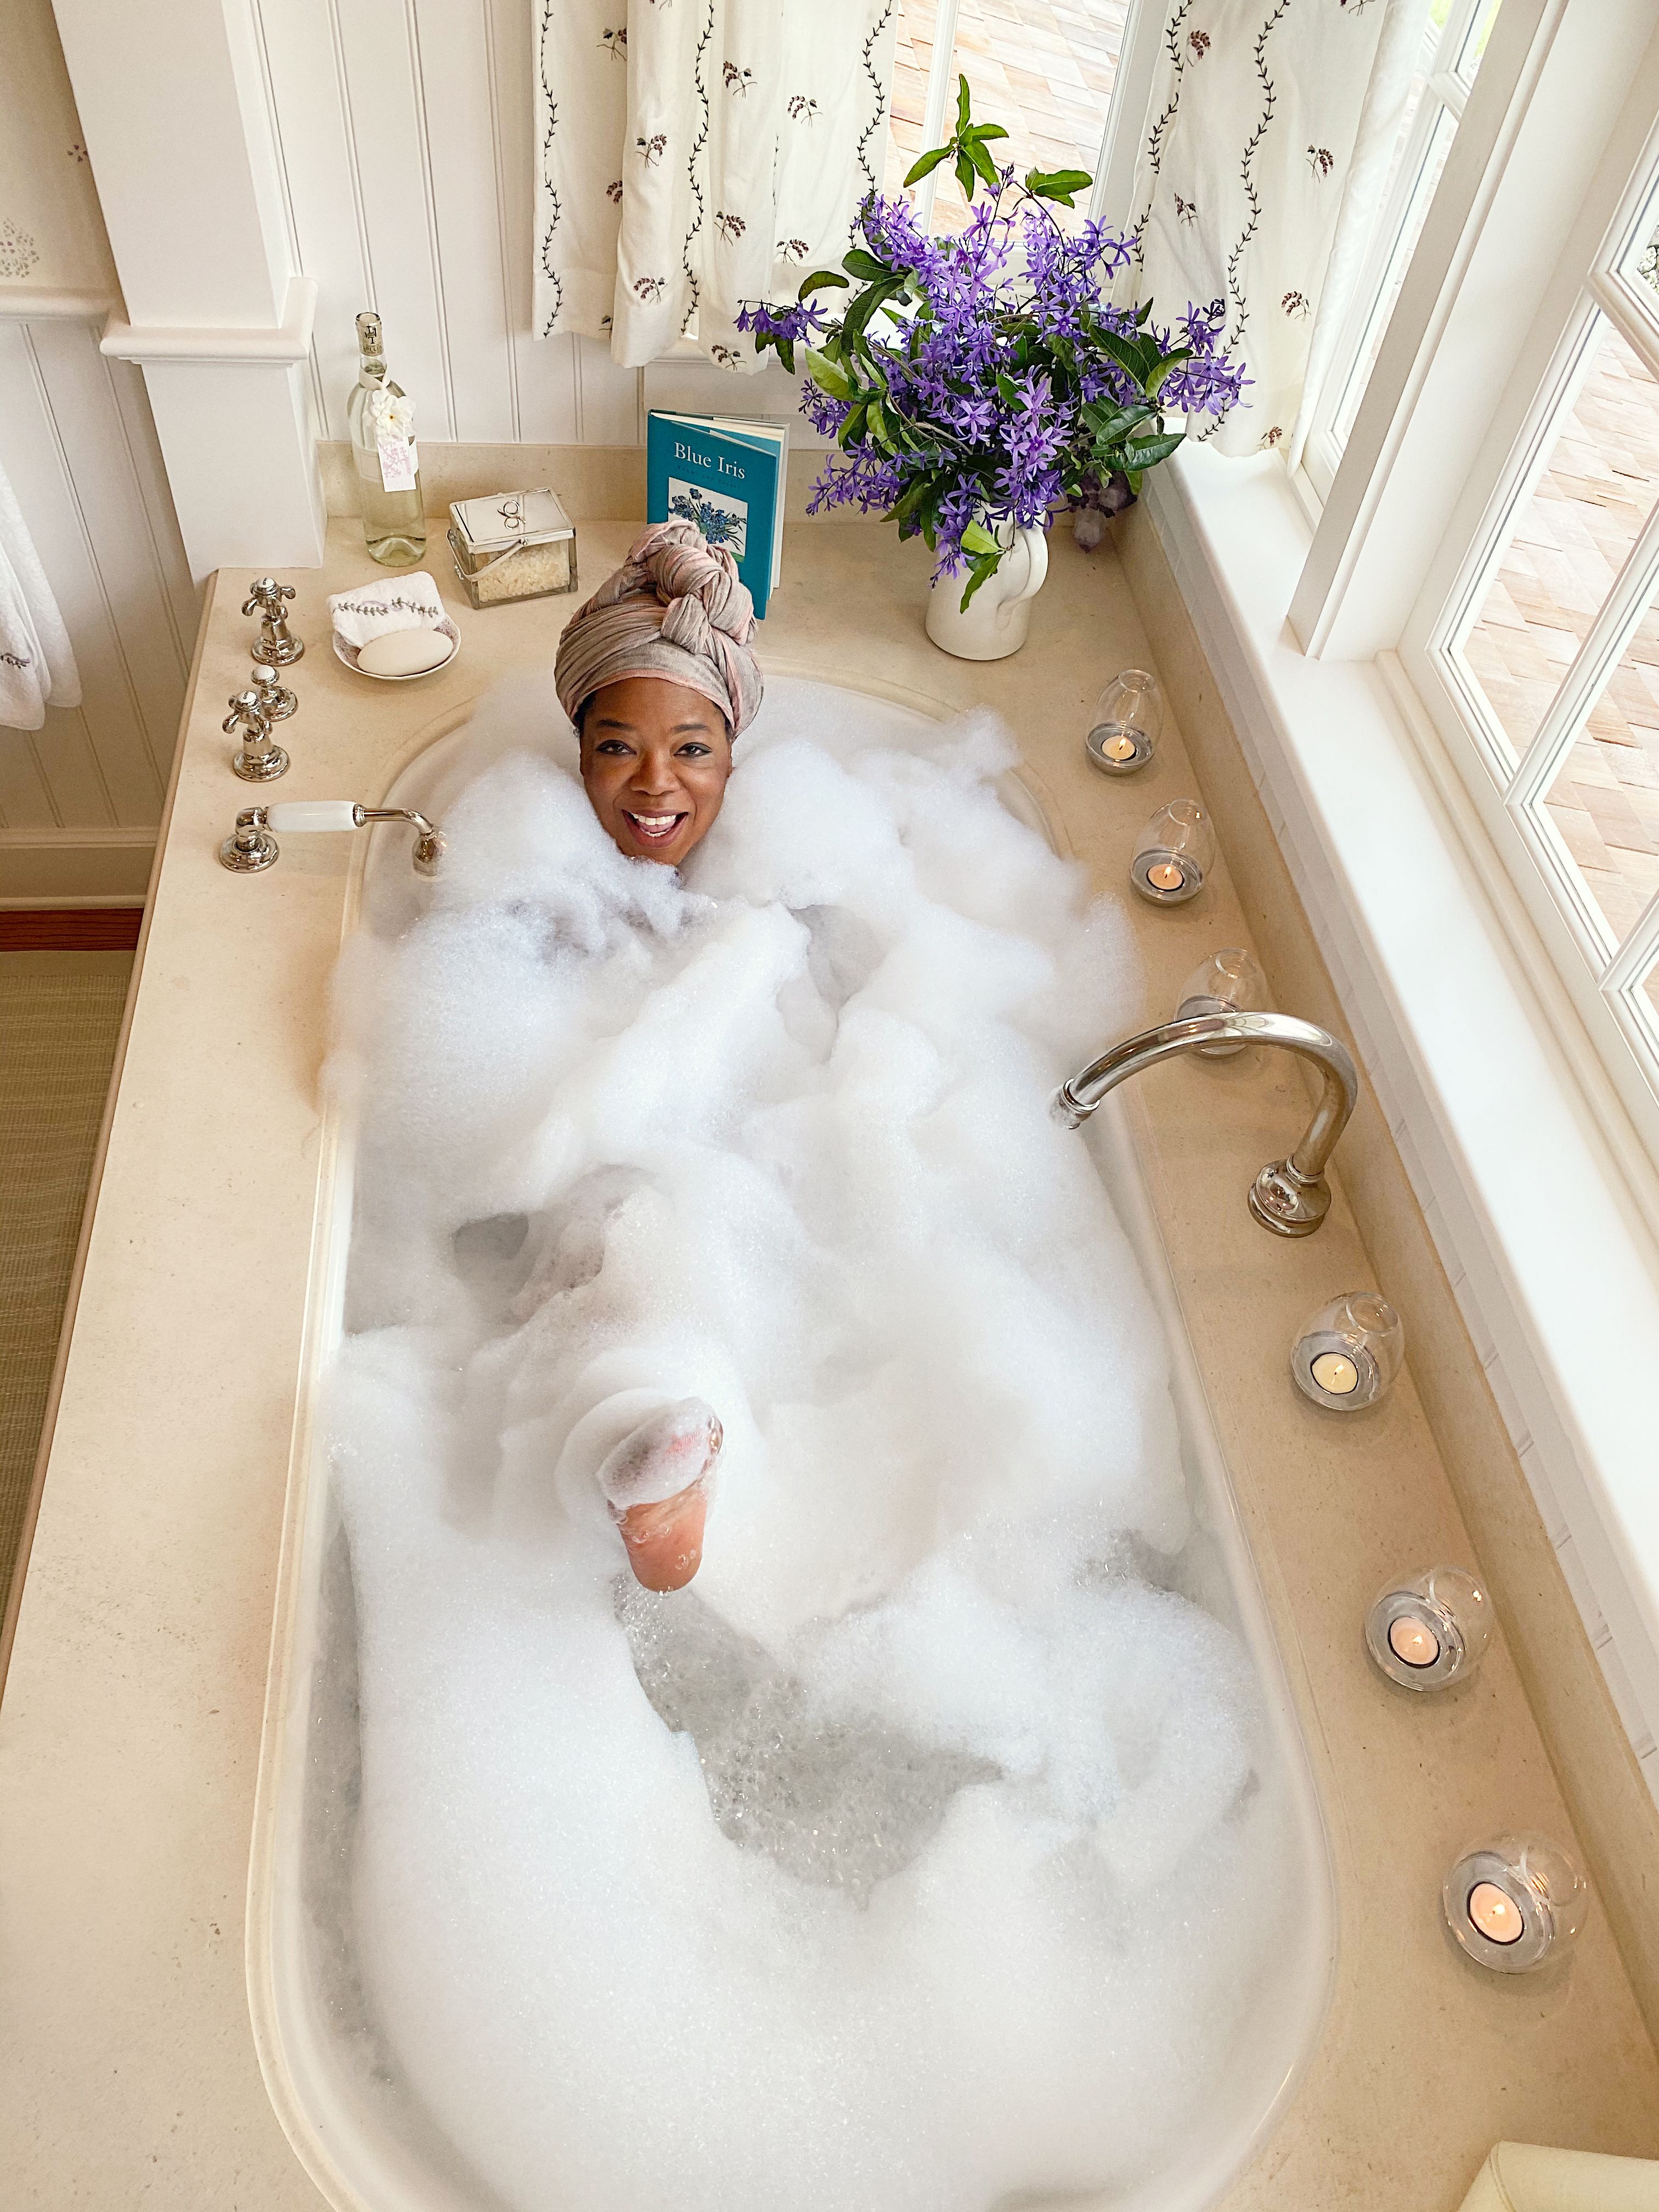 Oprah Reveals Her Bath Routine in Her Specially Carved Bathtub